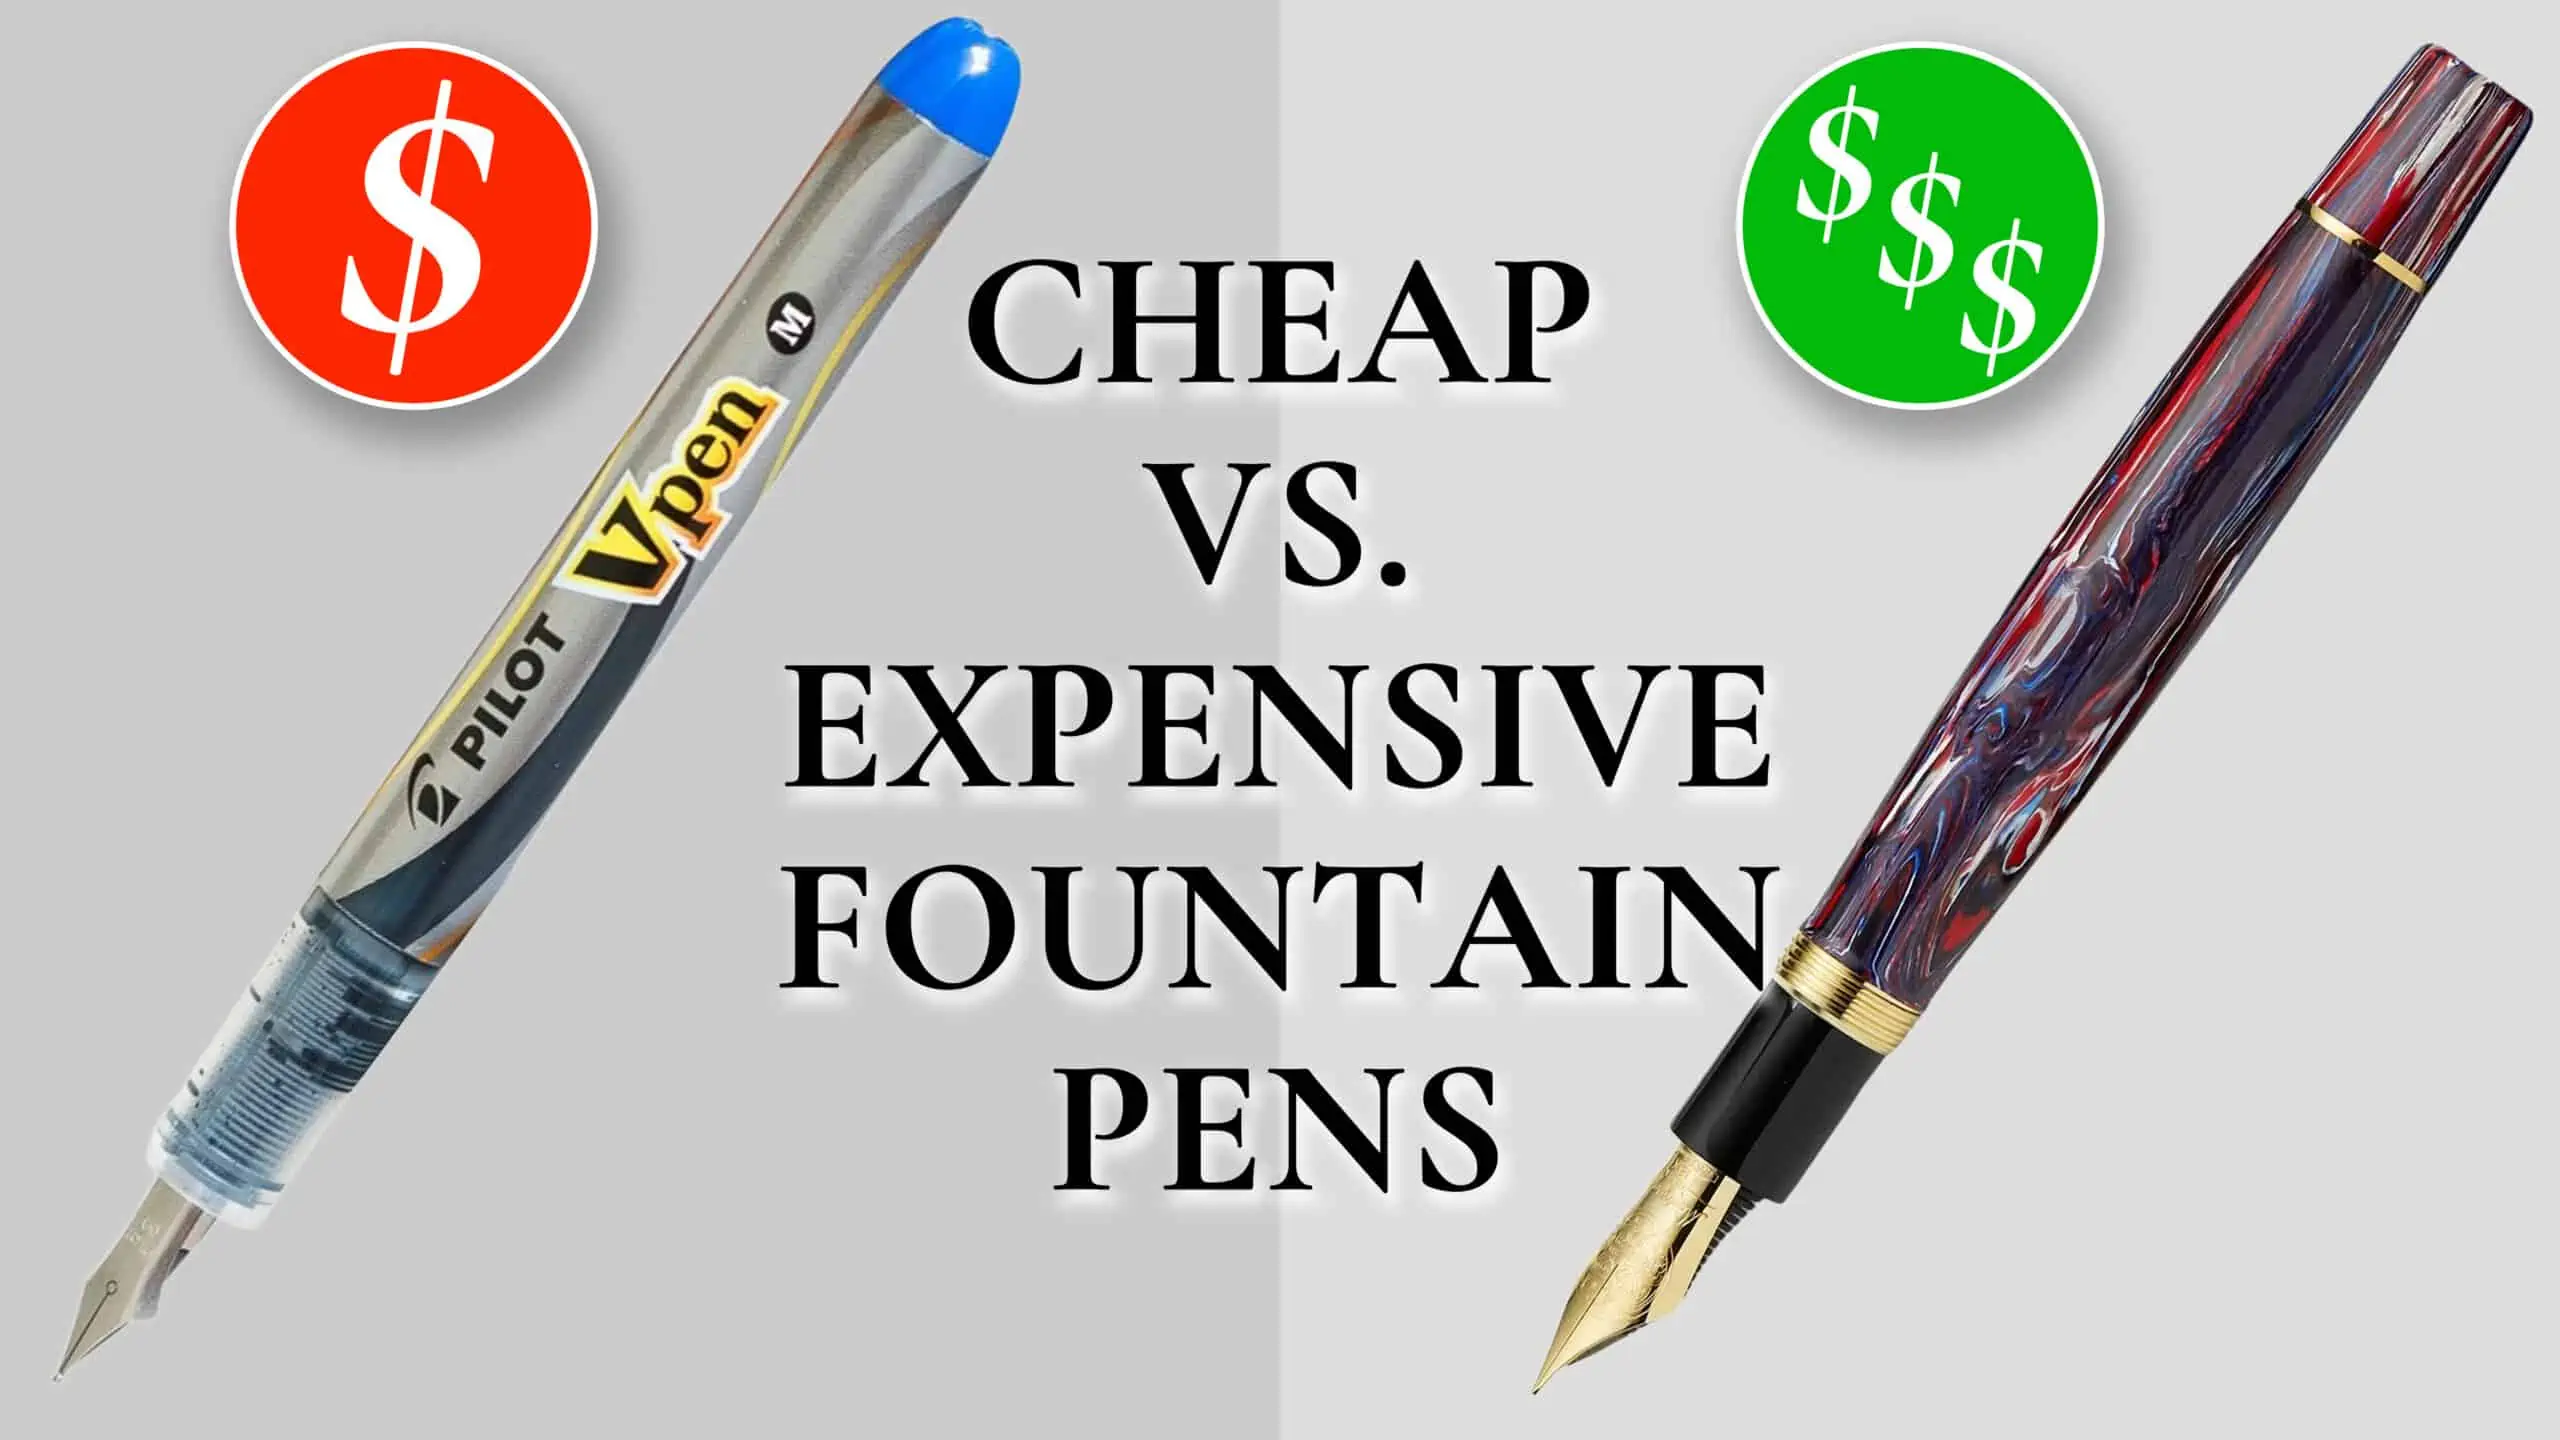 A) Fountain Pens